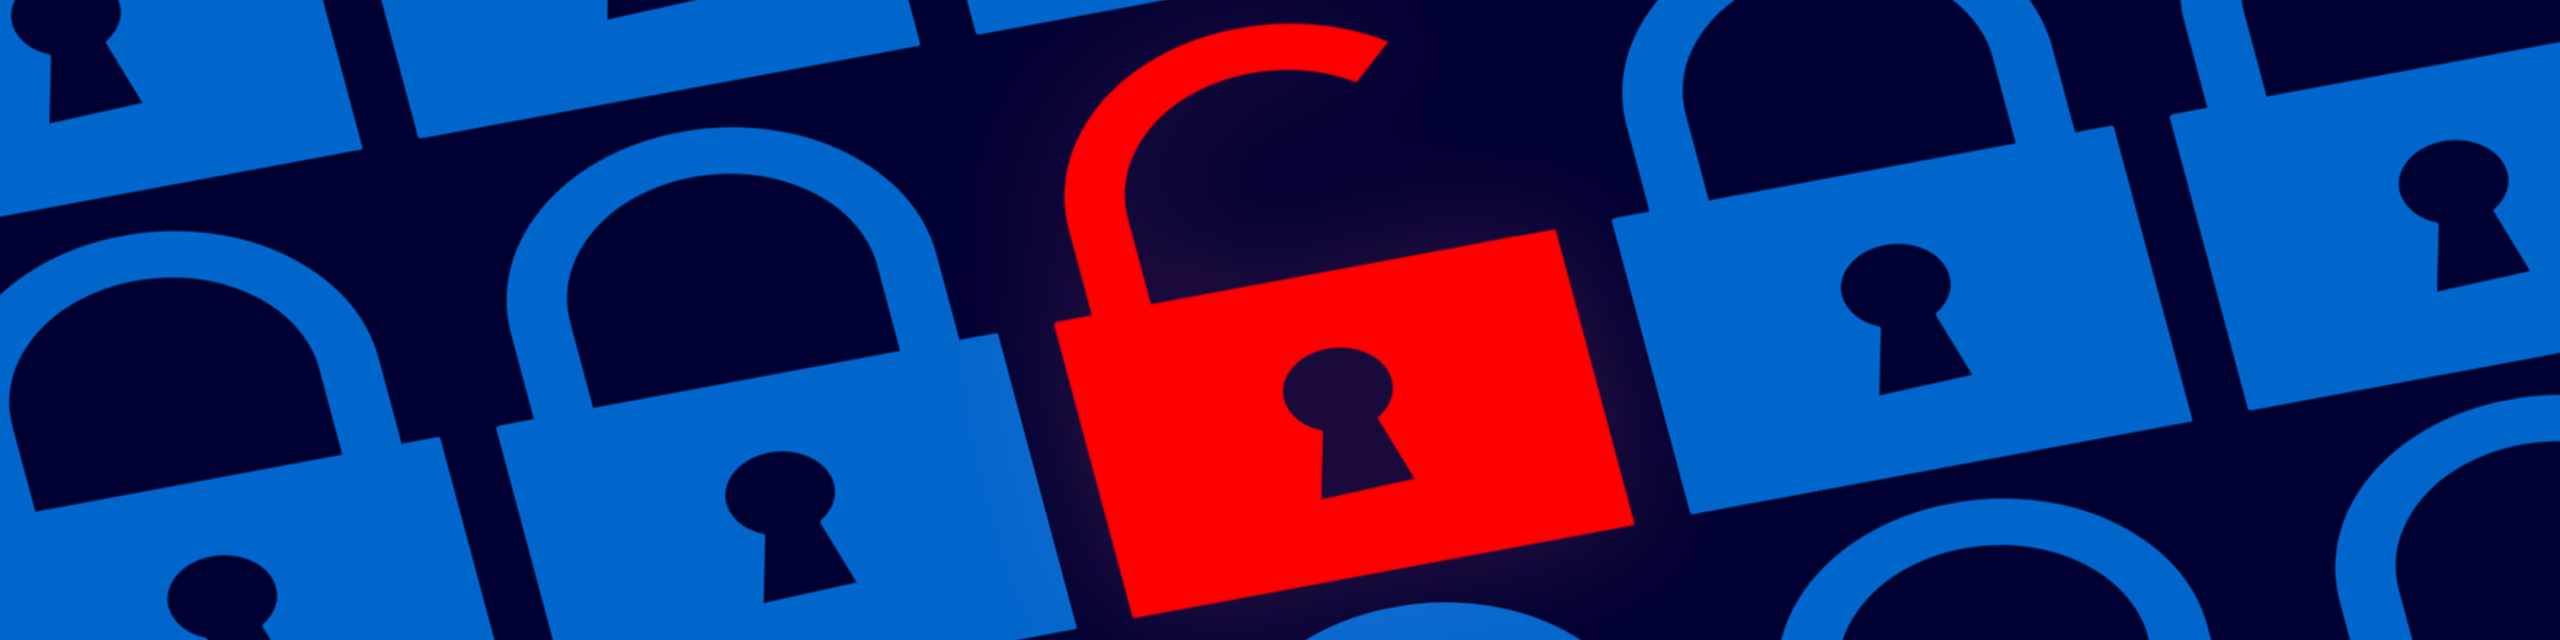 Cyber-sécurité installation antivirus firewall backup Annecy Savoie Chambéry